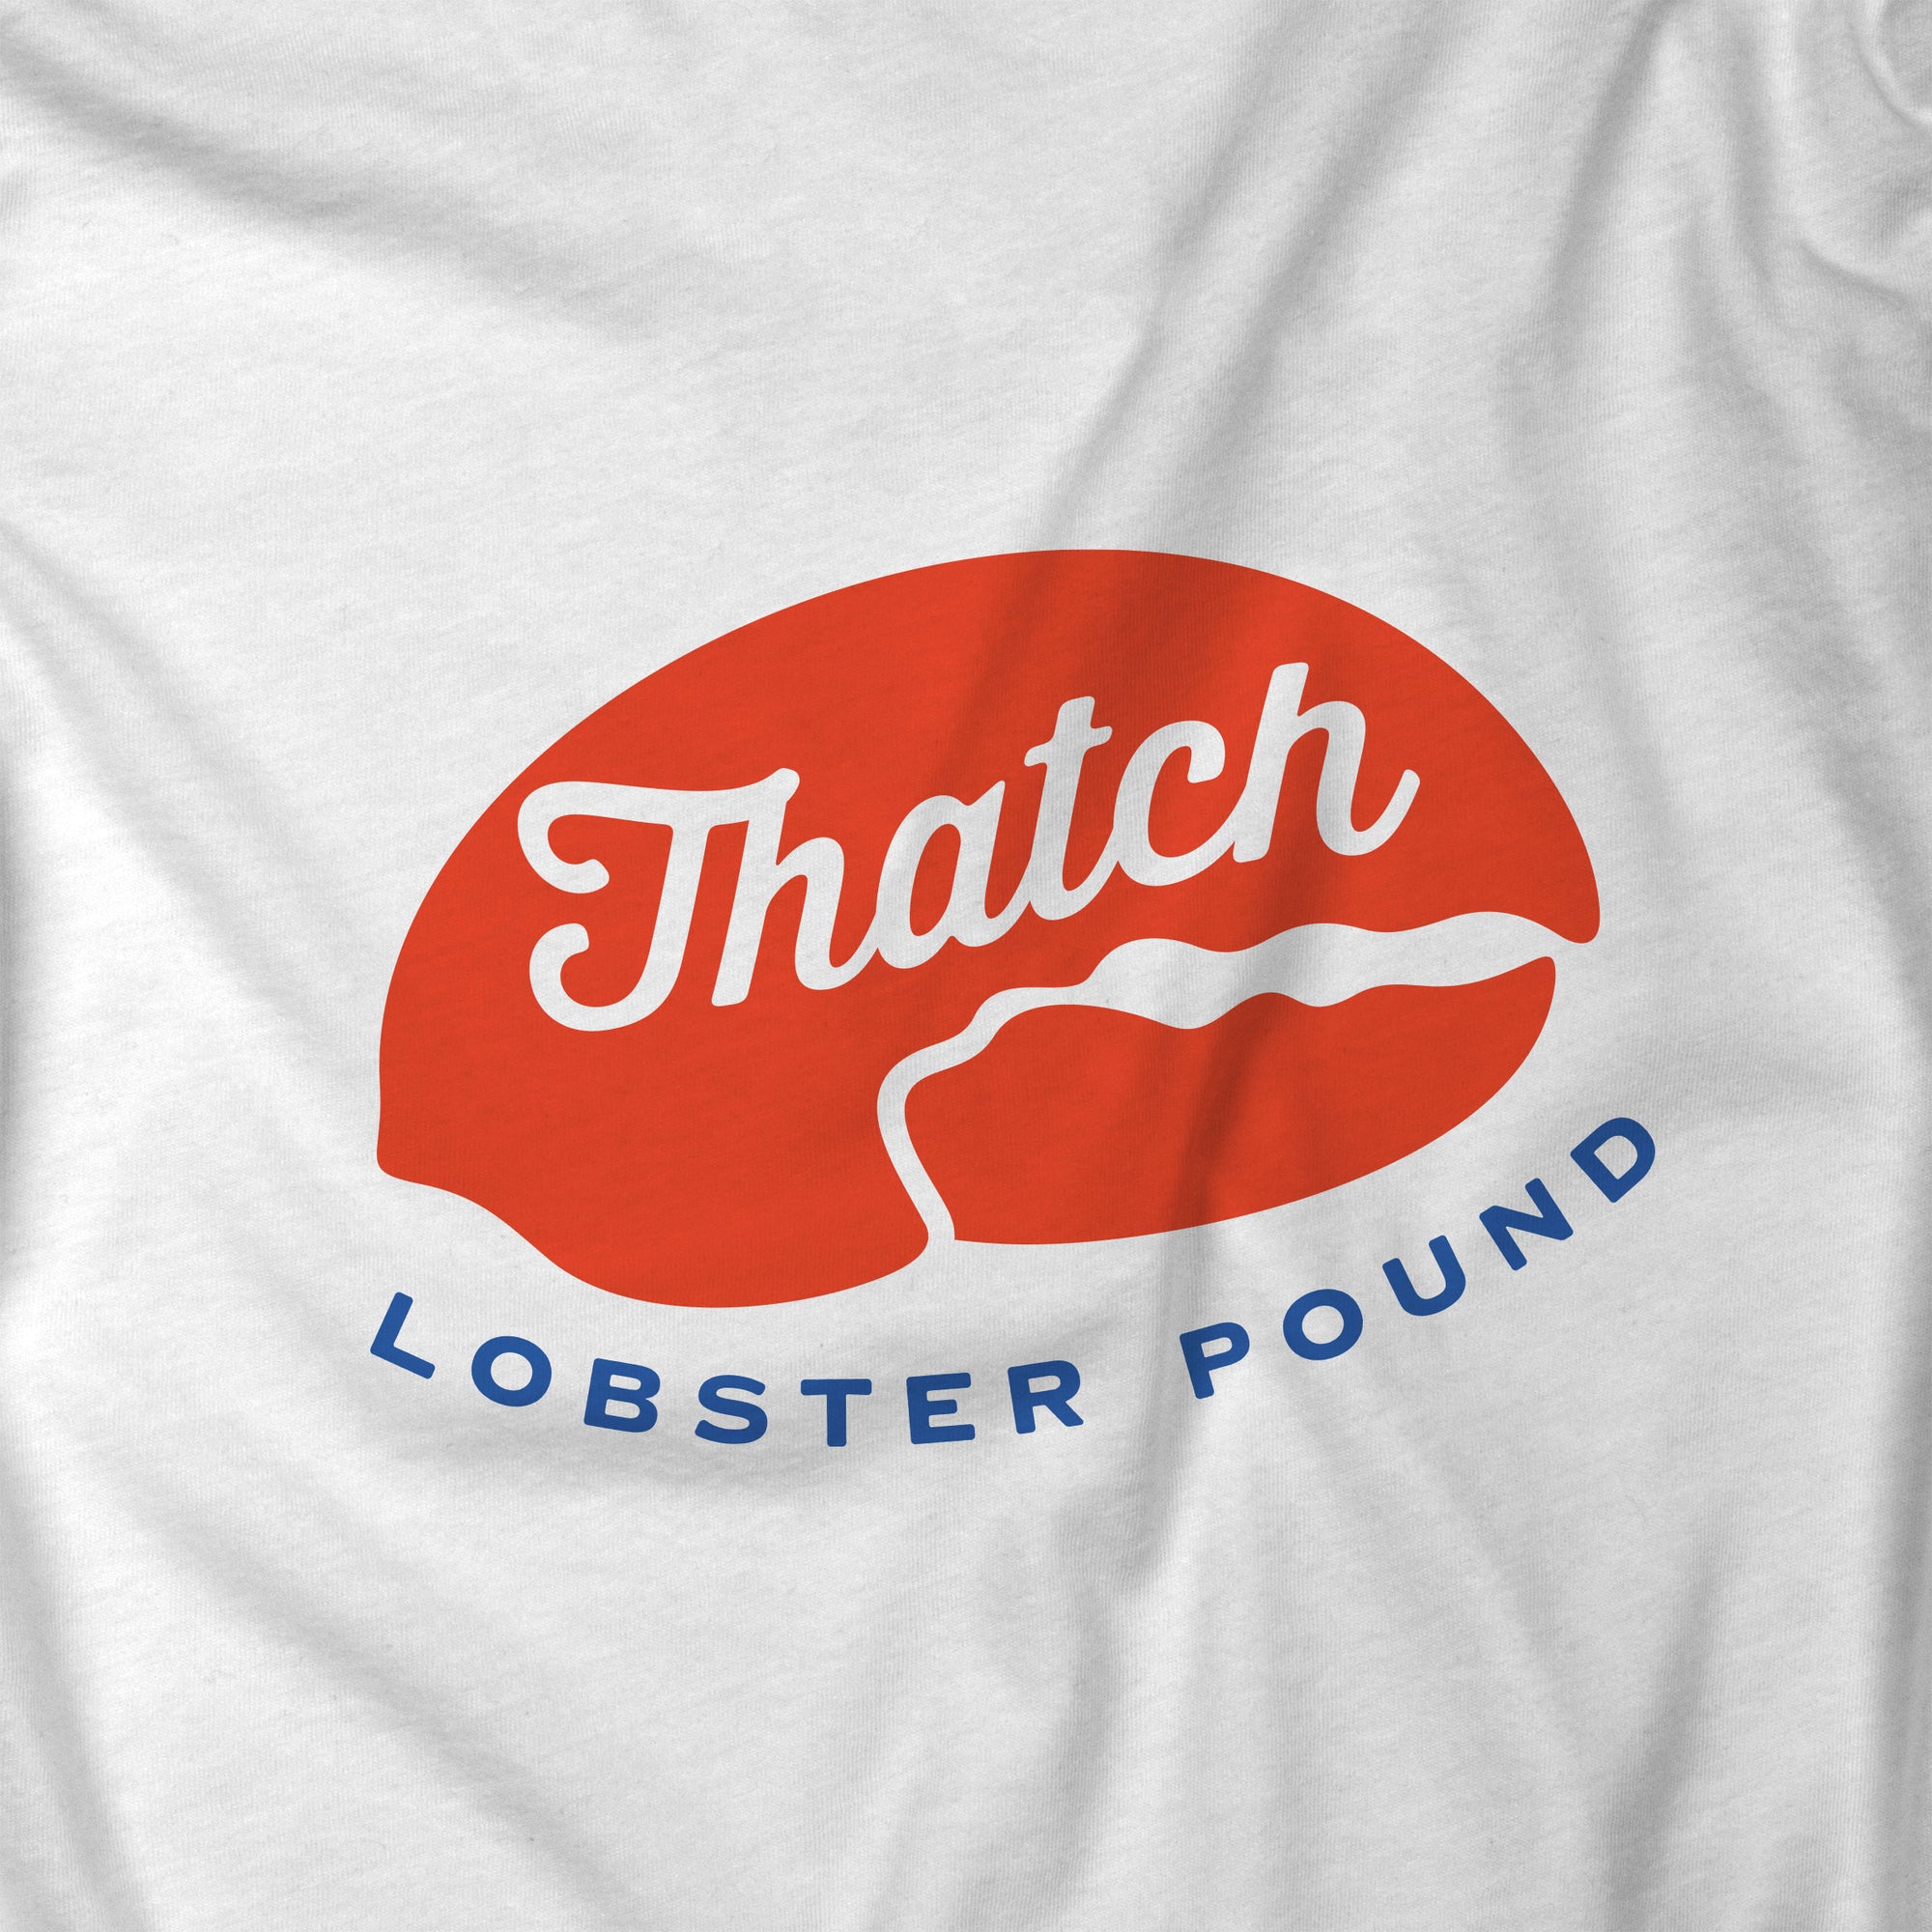 Thatch Lobster Pound T-Shirt